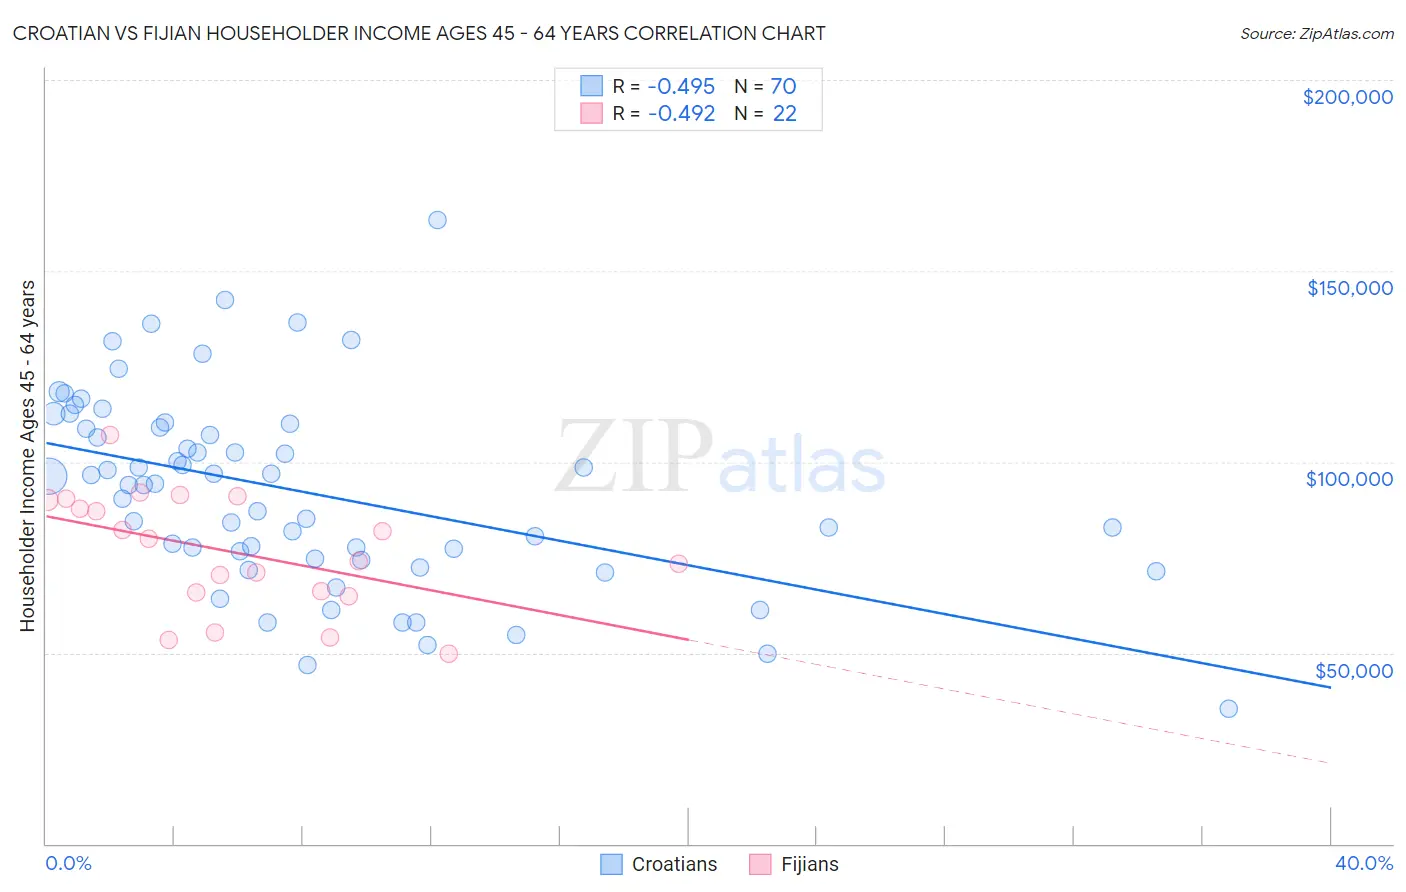 Croatian vs Fijian Householder Income Ages 45 - 64 years